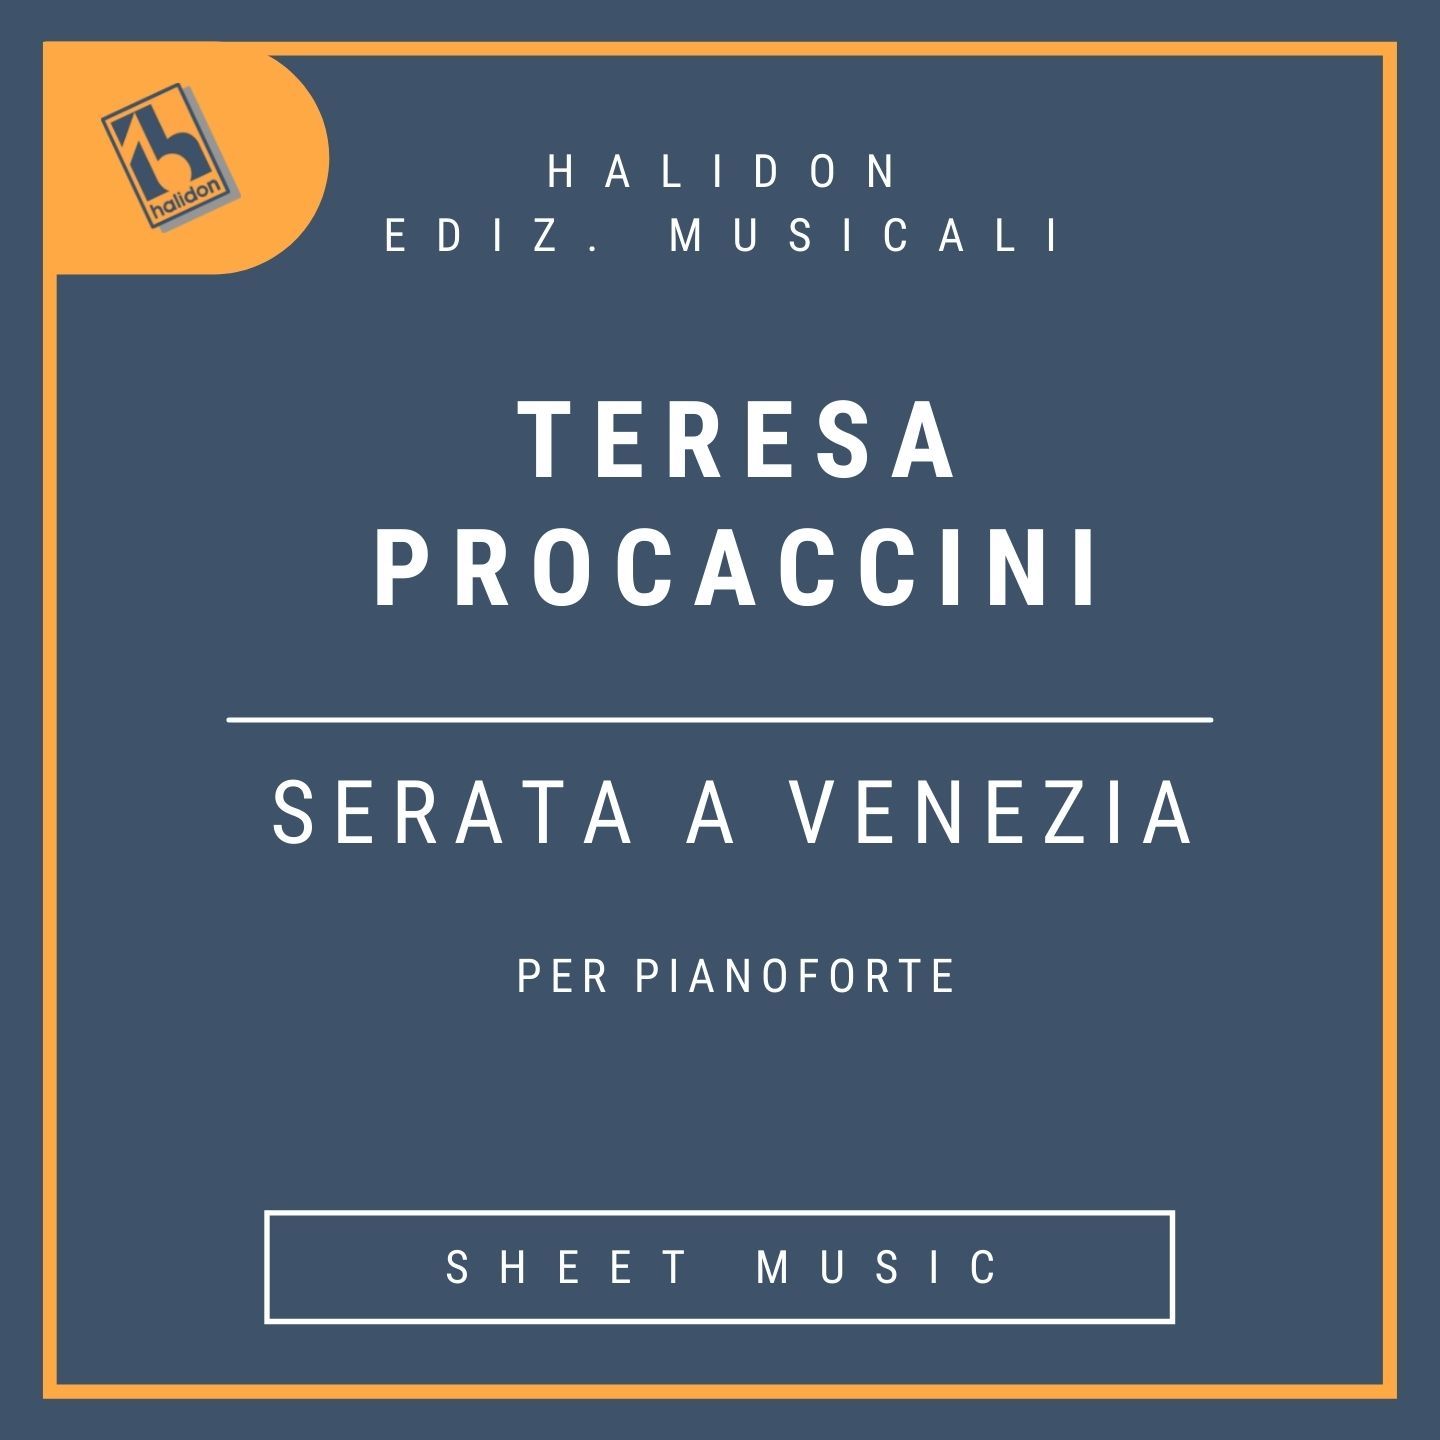 Teresa Procaccini - Serata a Venezia